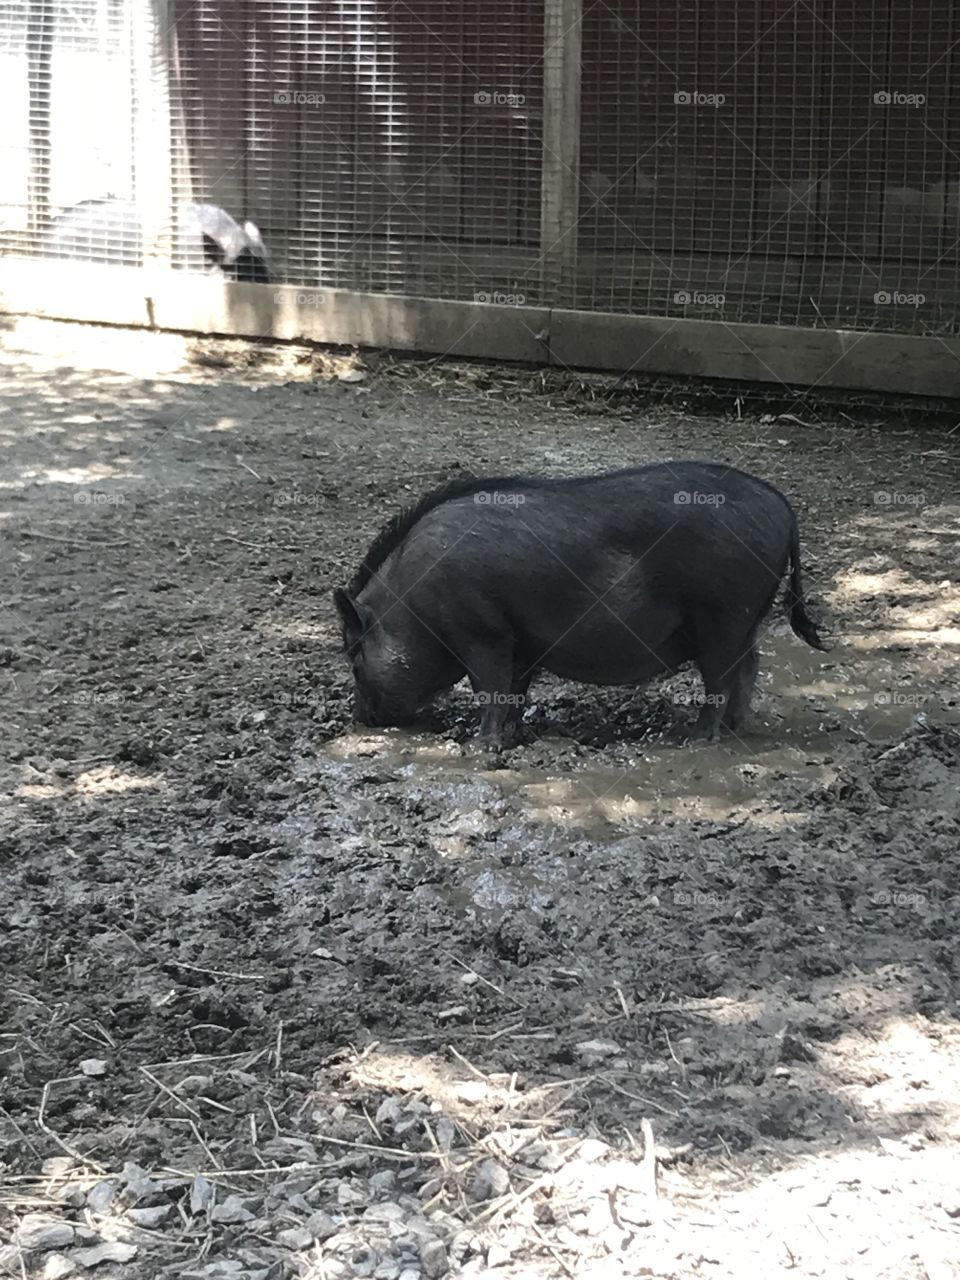 Pig enjoying the mud in the shade.